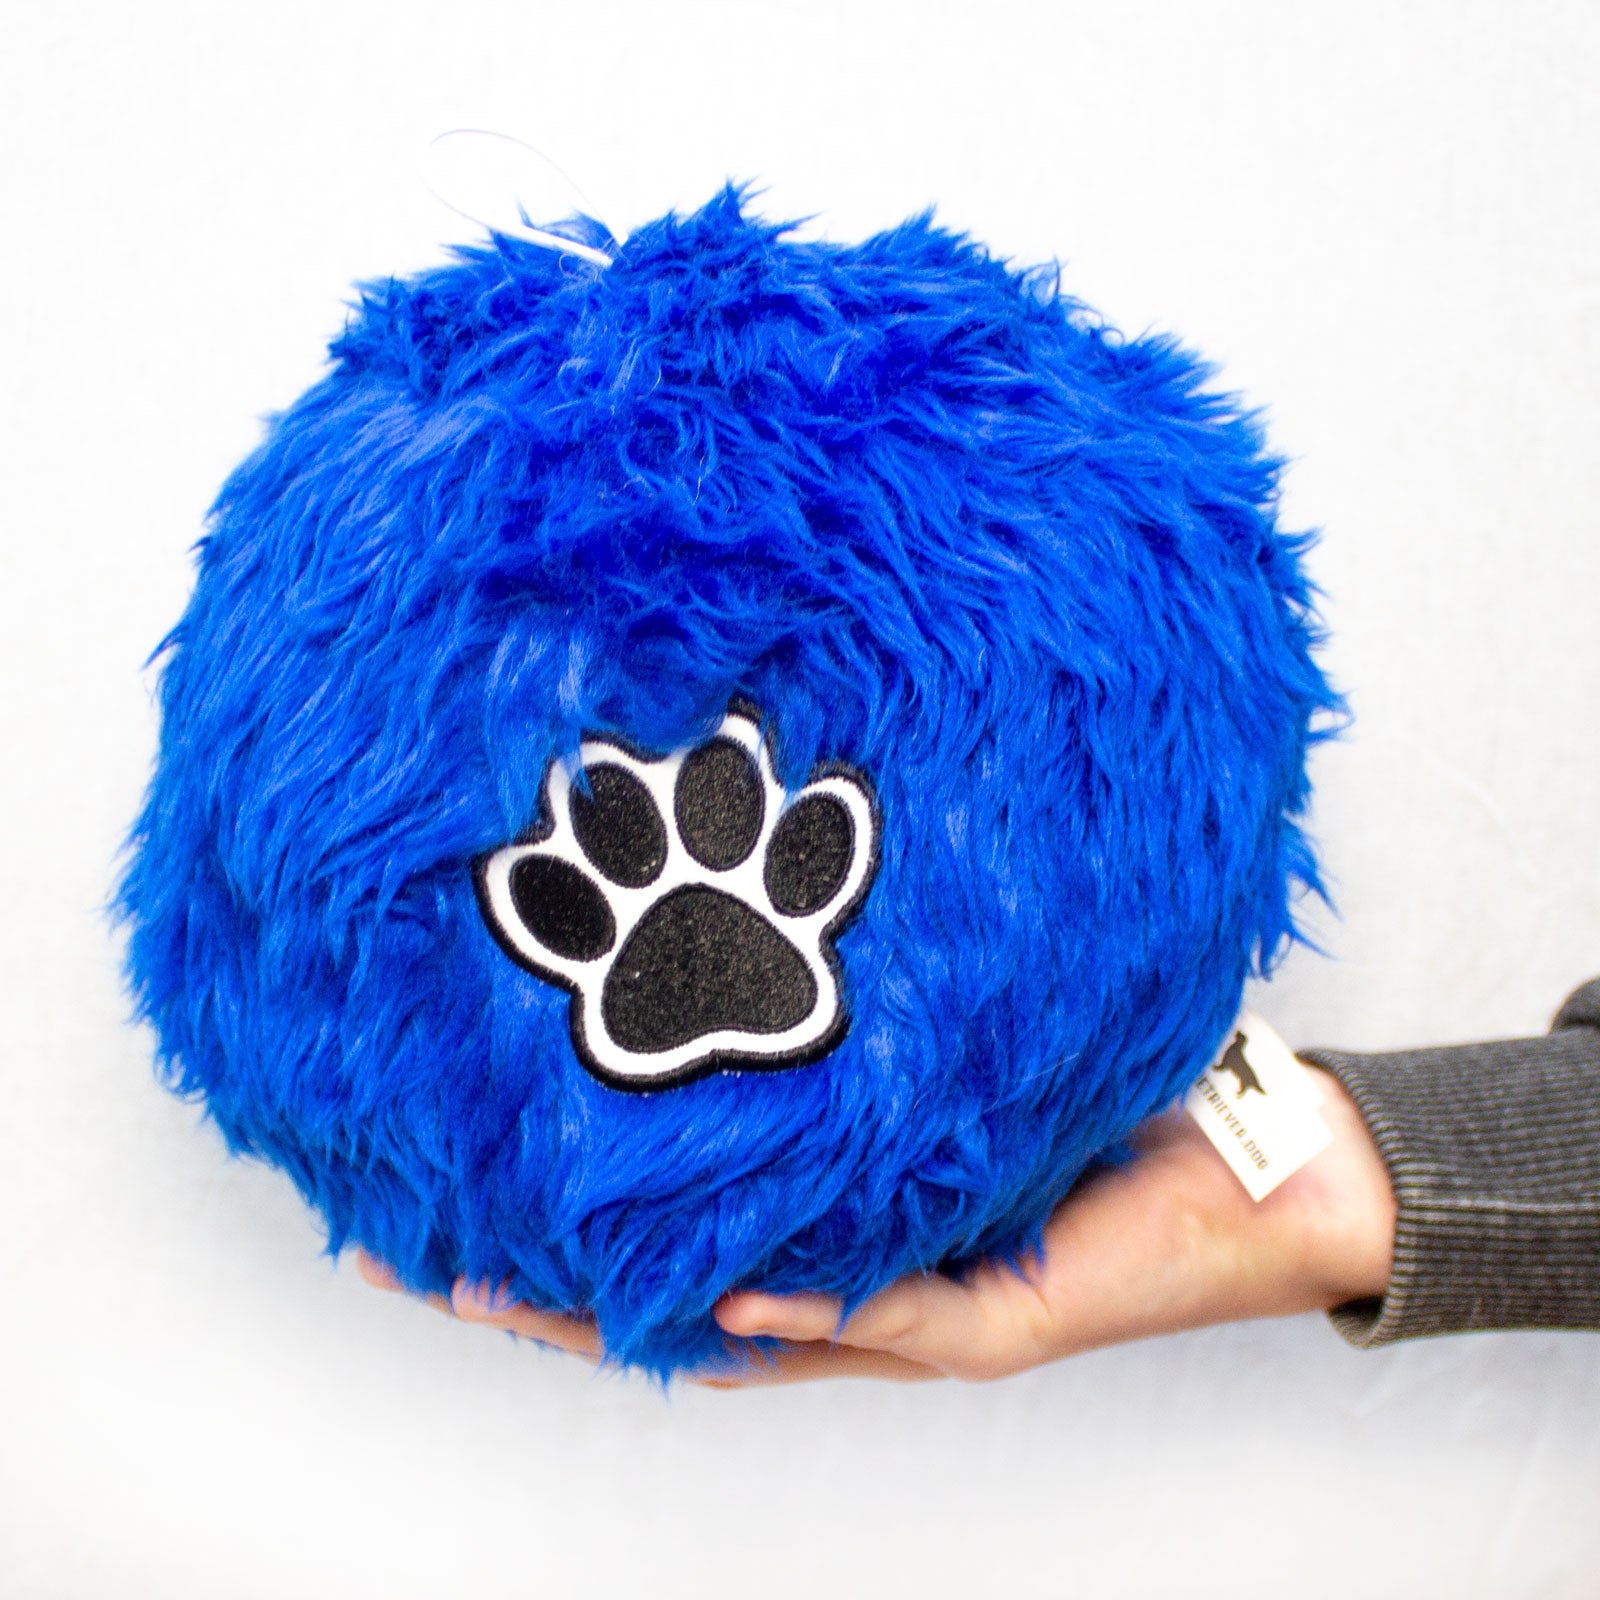 Soft Fluffy Ball For Weimaraner Dog - Large Size